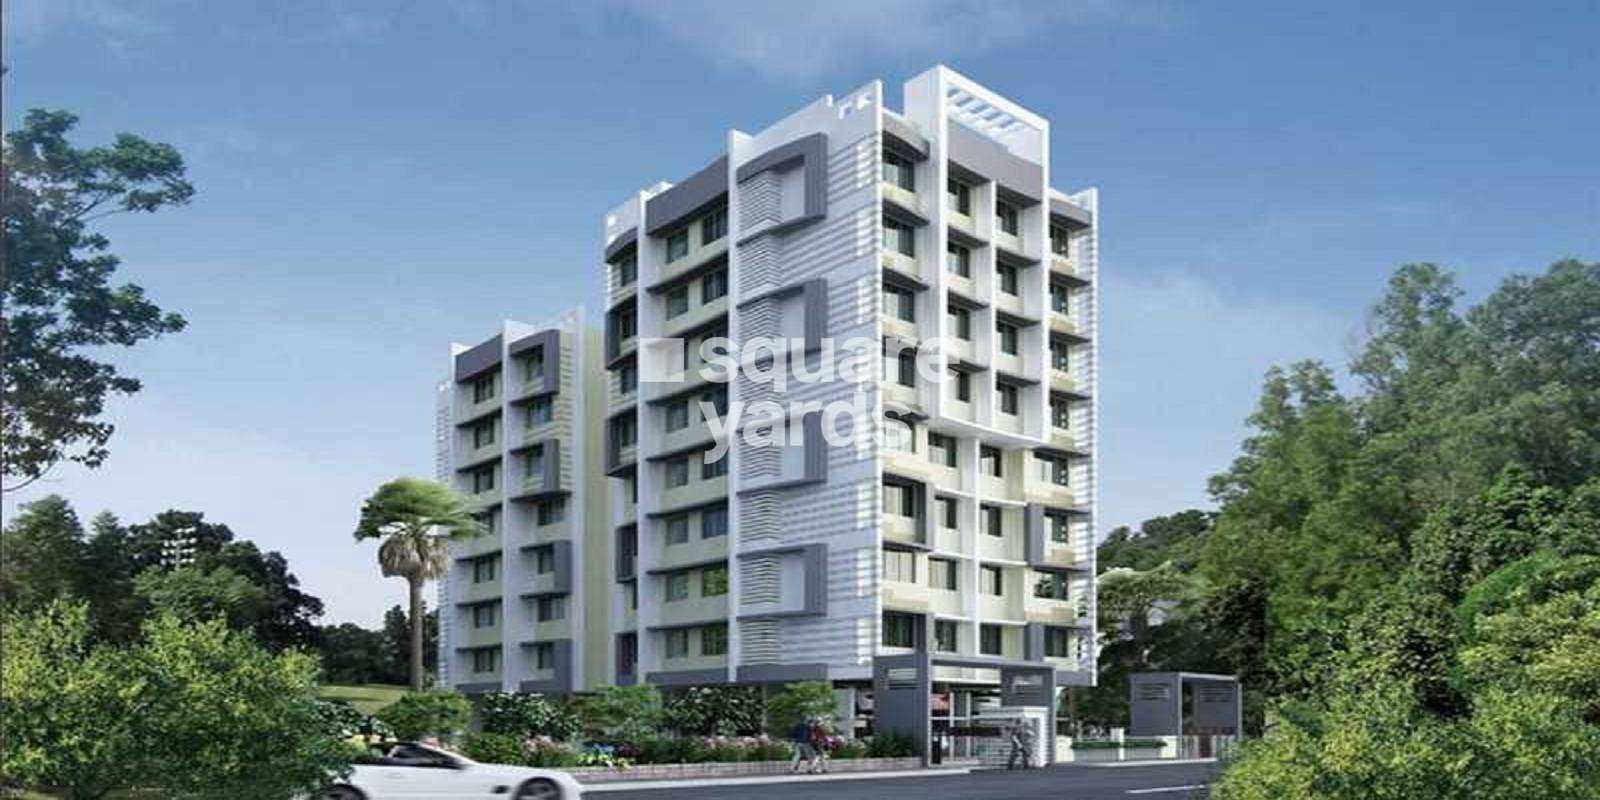 Gurukrupa Sunil Apartments Cover Image